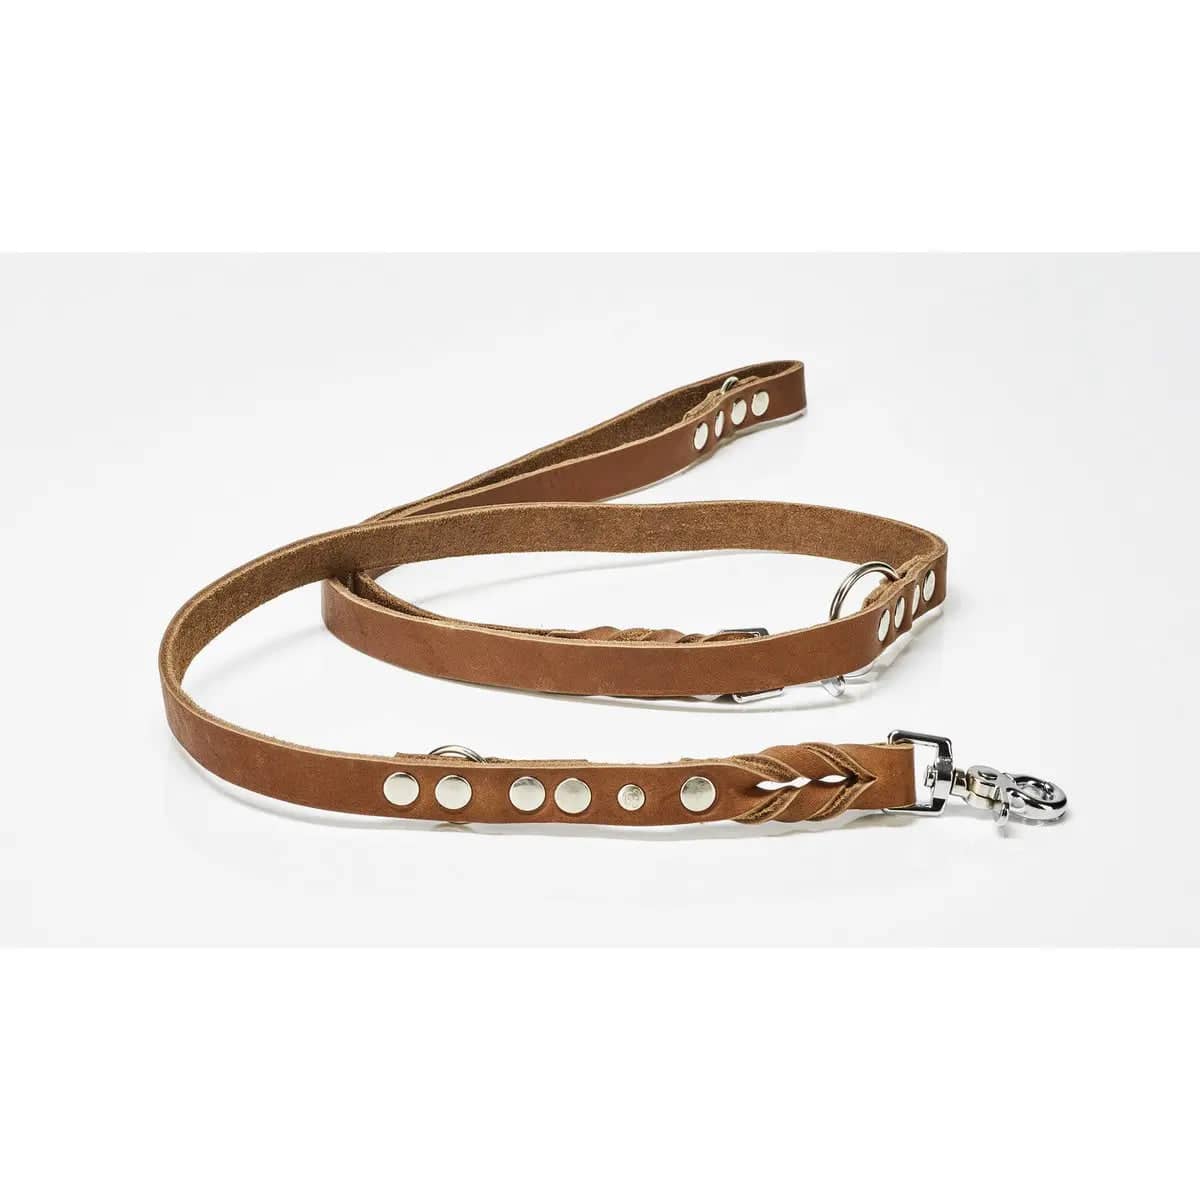 Adjustable comfort dog collar - Quality GIRO craftsmanship